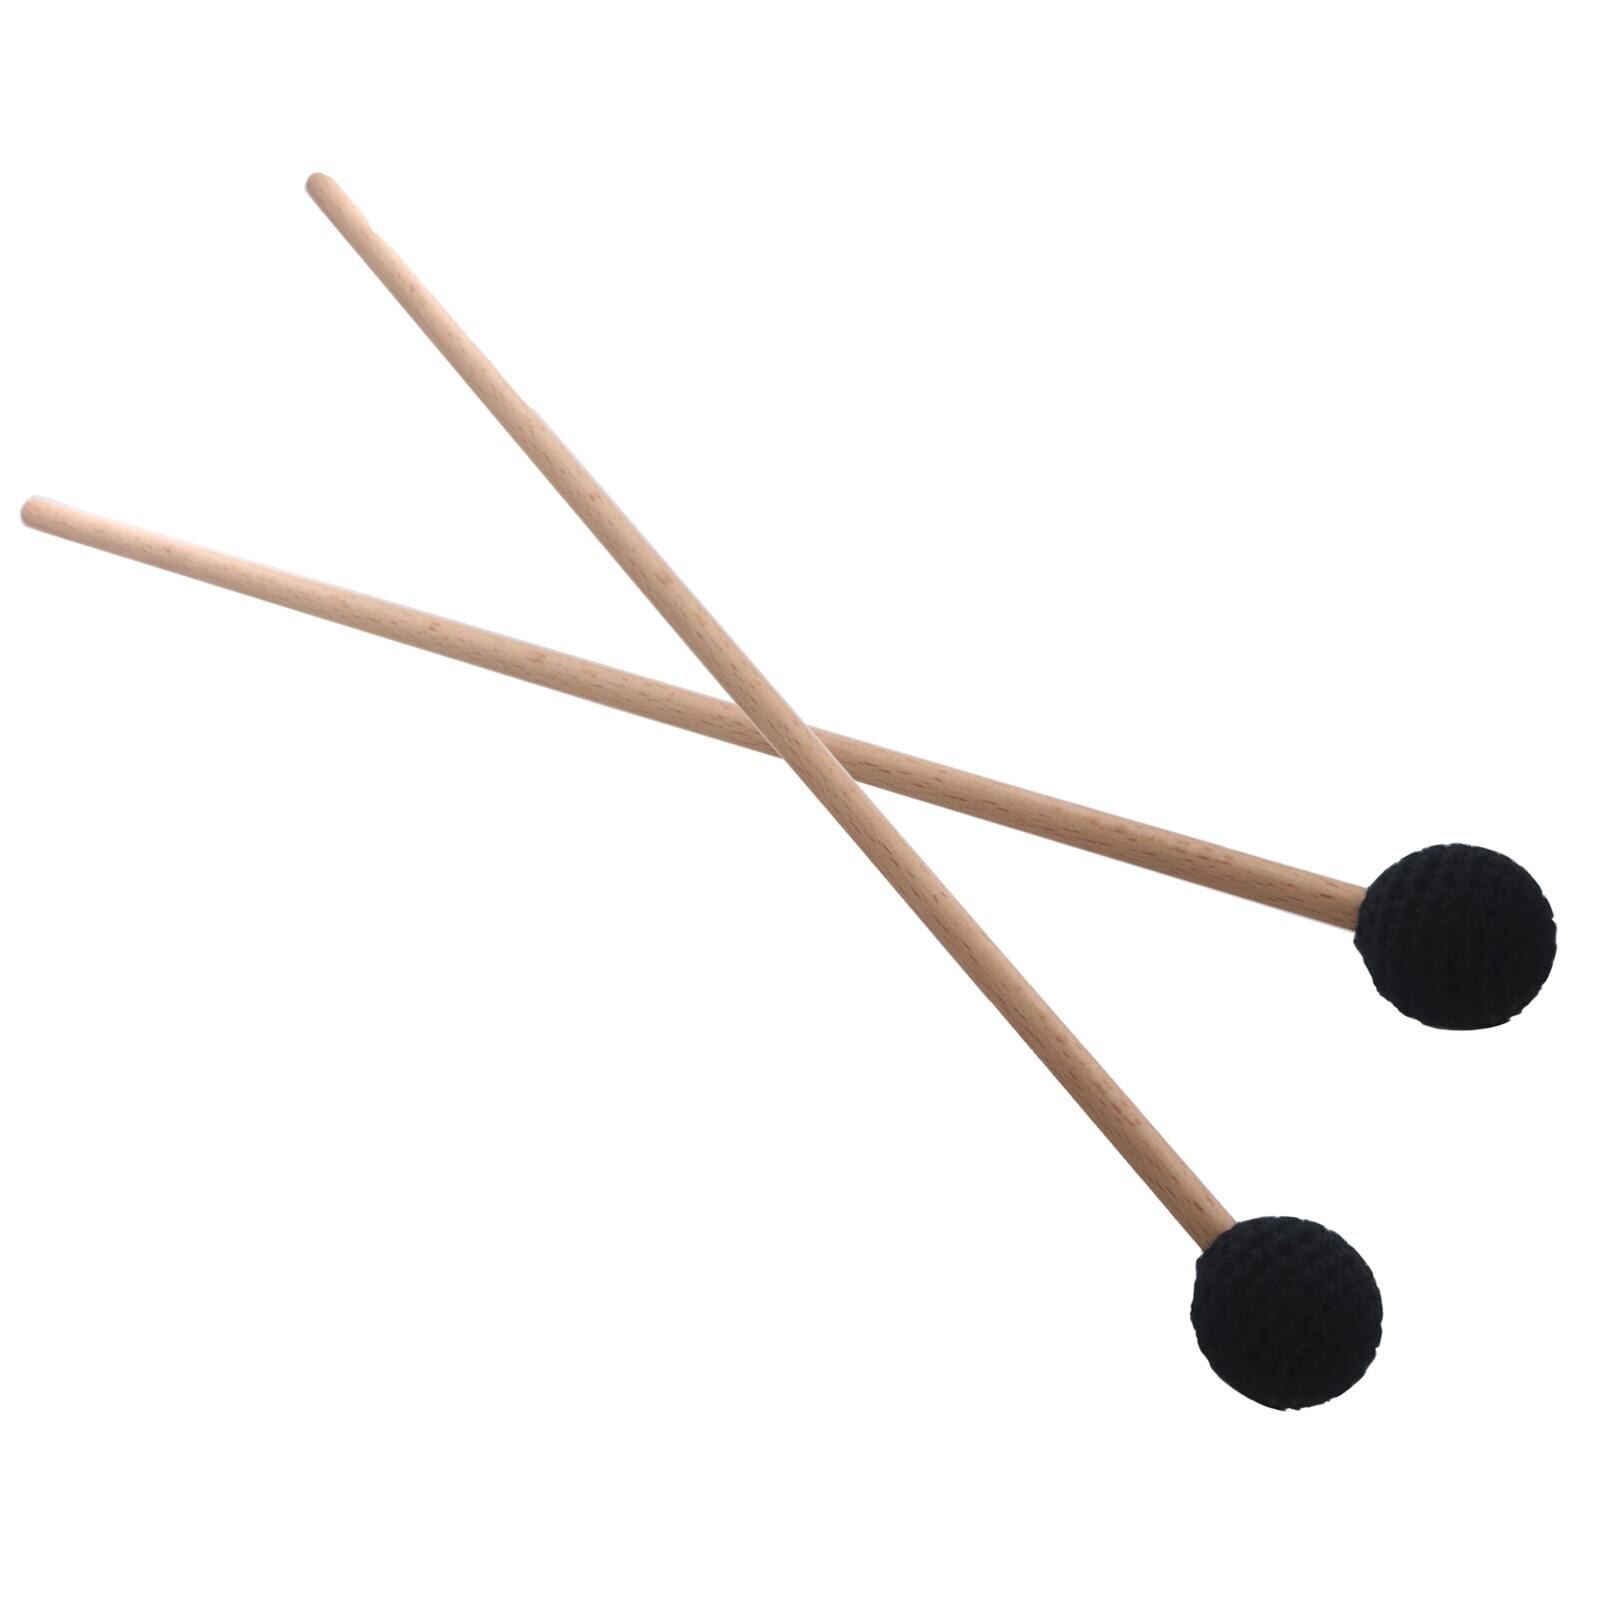 2 Pieces Percussion Mallets Sticks Percussion Instrument Kit Glockenspiel Sticks for Gong Woodblock Drum Bells Glockenspiel